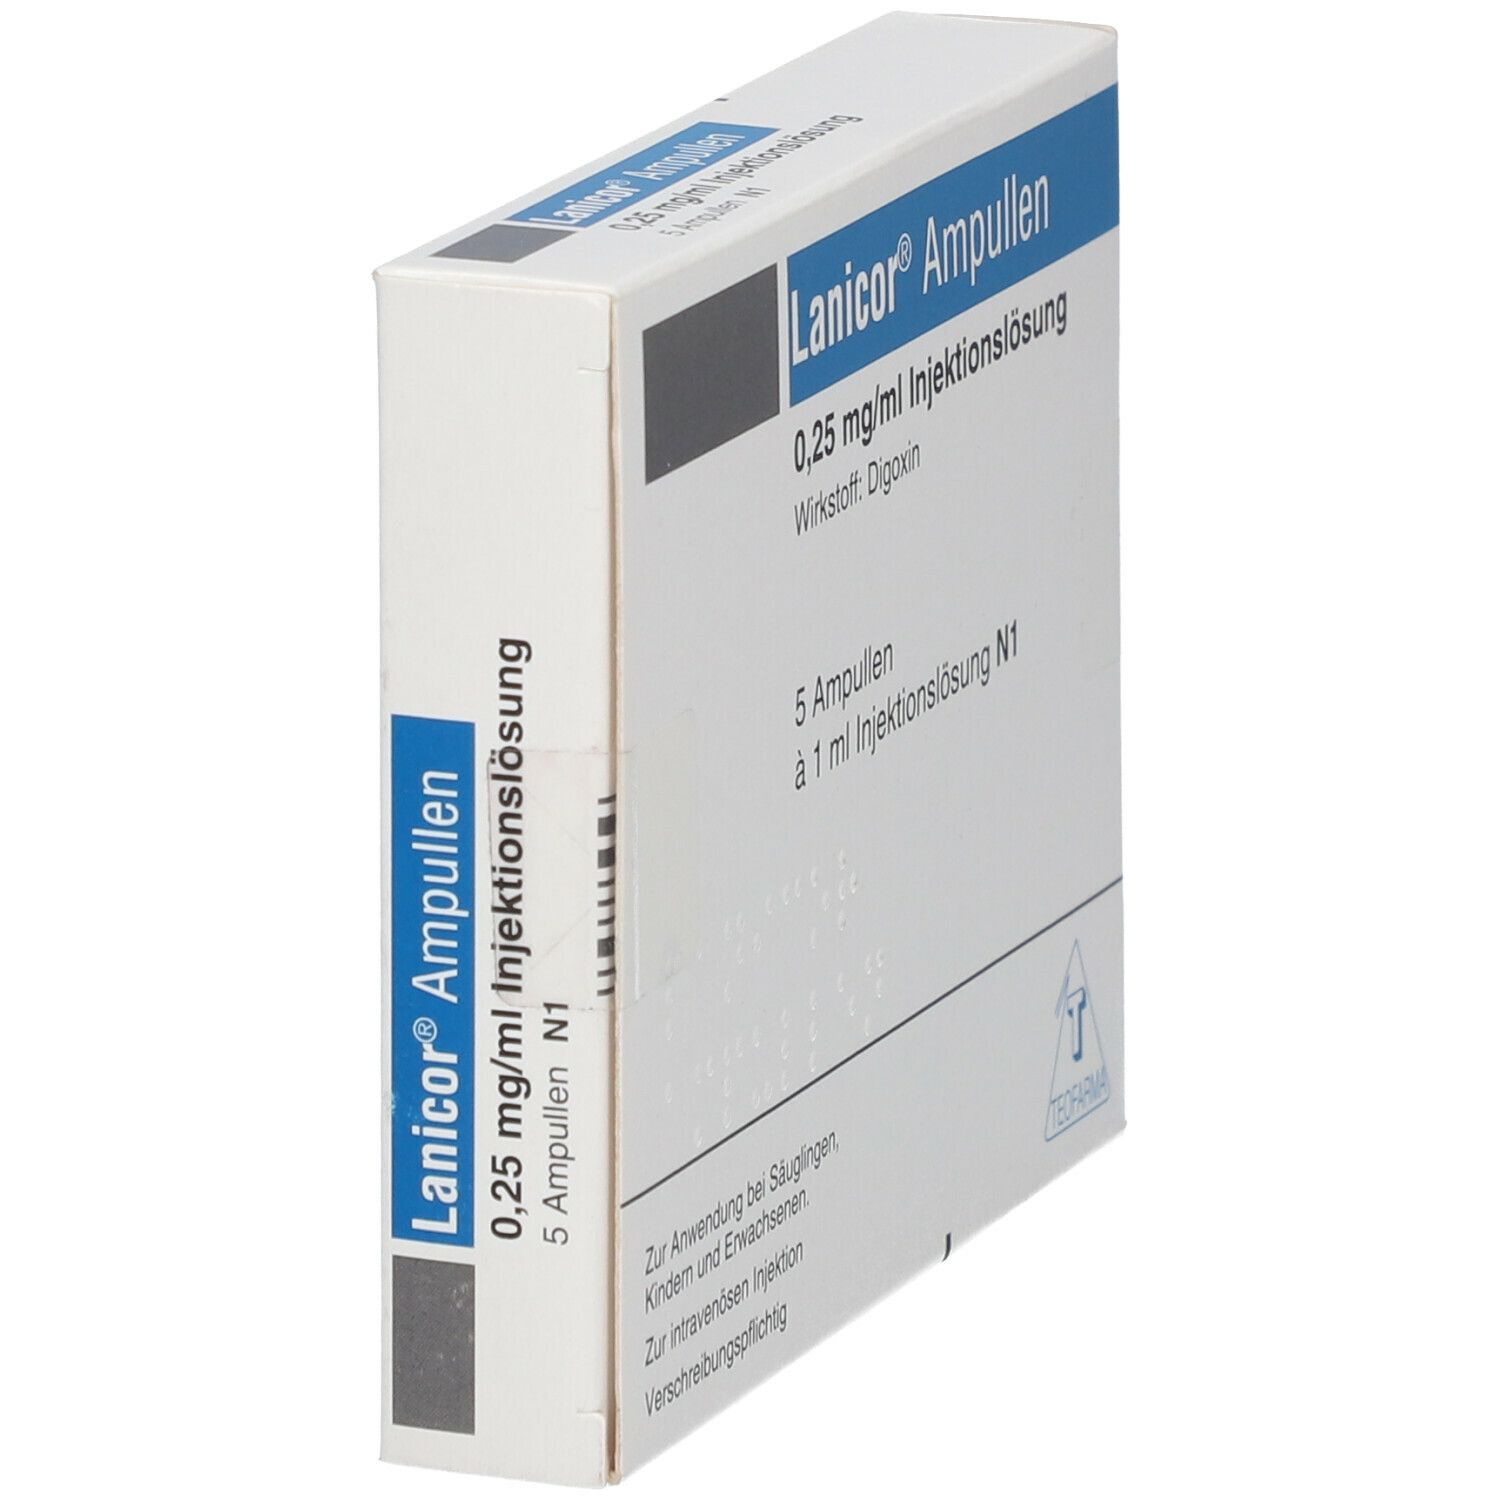 Lanicor® Ampullen 0,25 mg Digoxin/ml